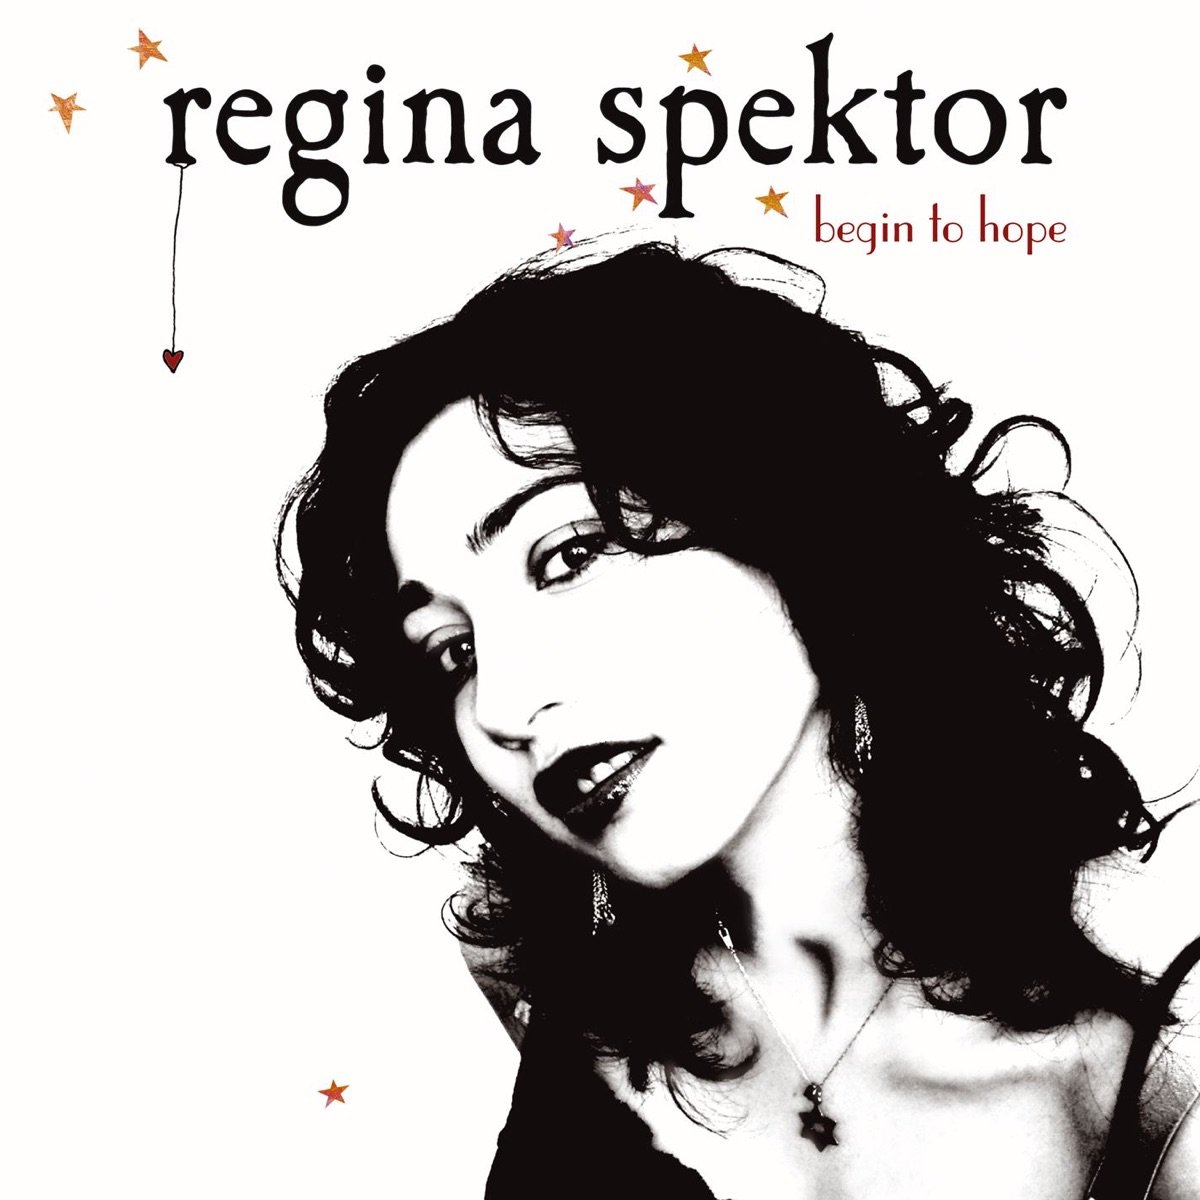 Spektor, Regina "Begin To Hope"